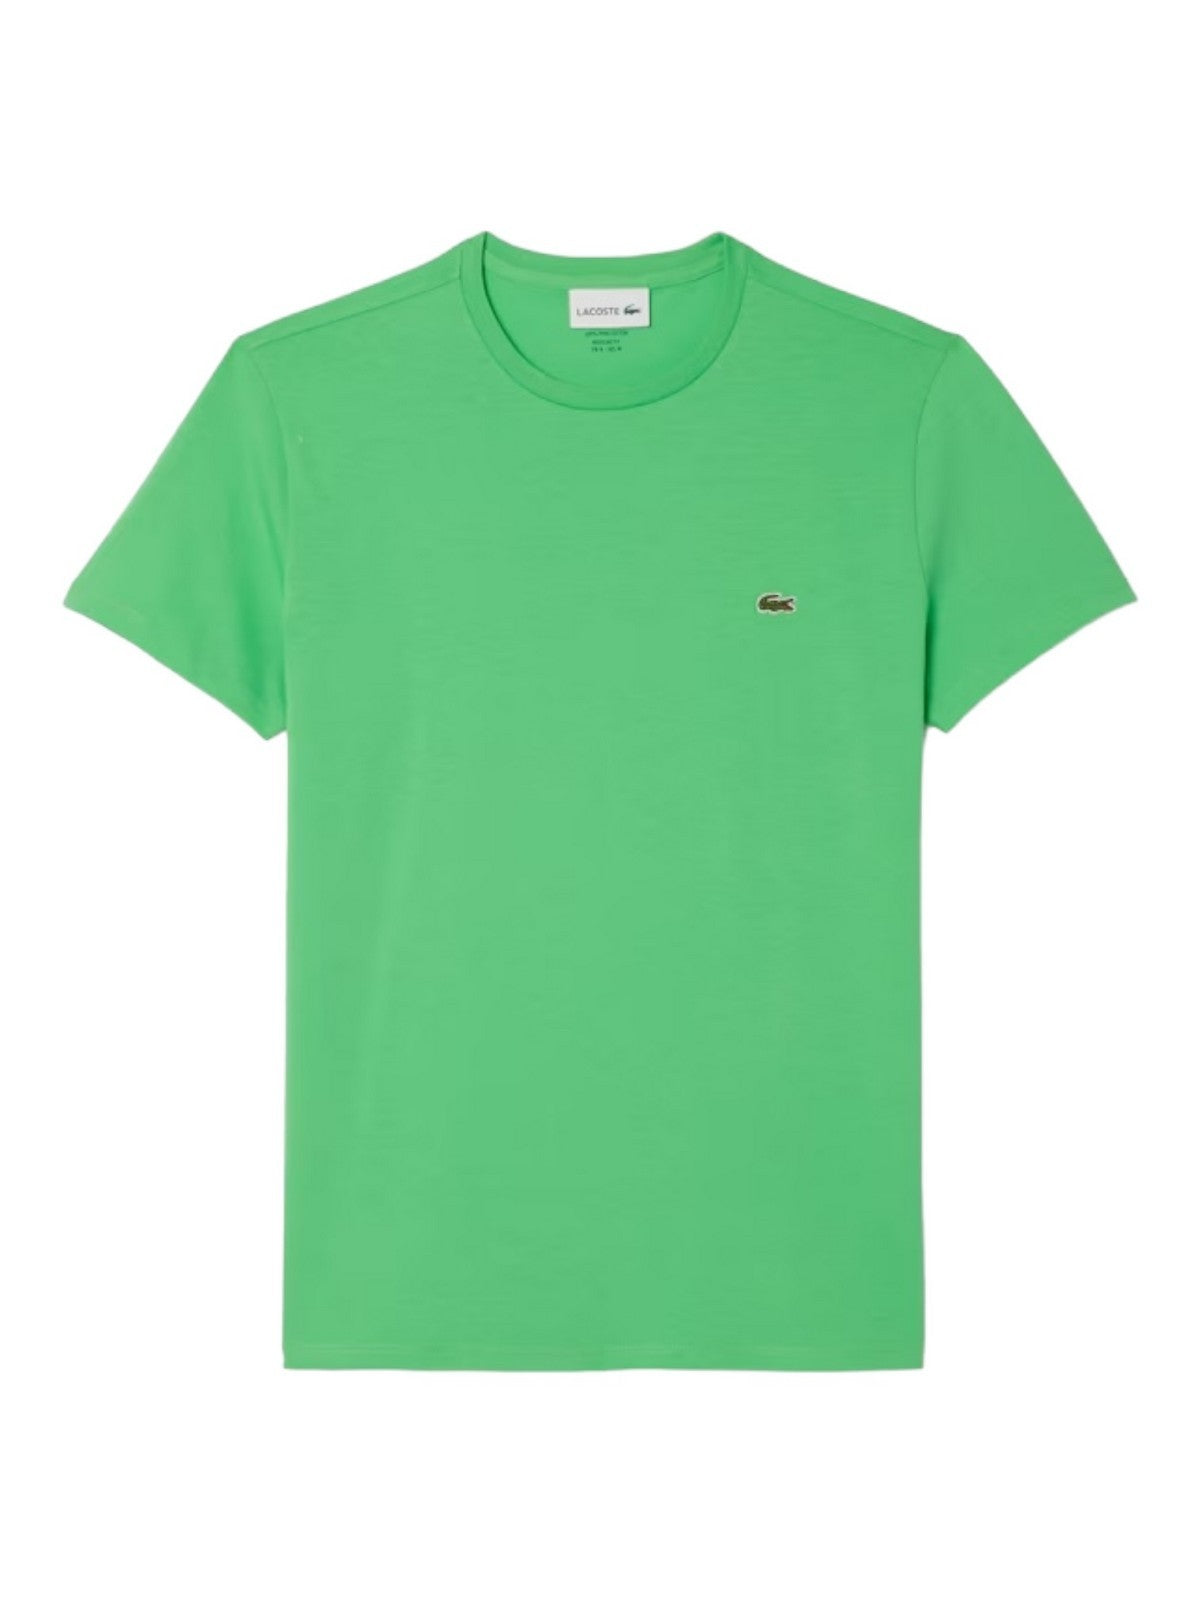 LACOSTE T-Shirt e Polo Uomo  TH6709 UYX Verde